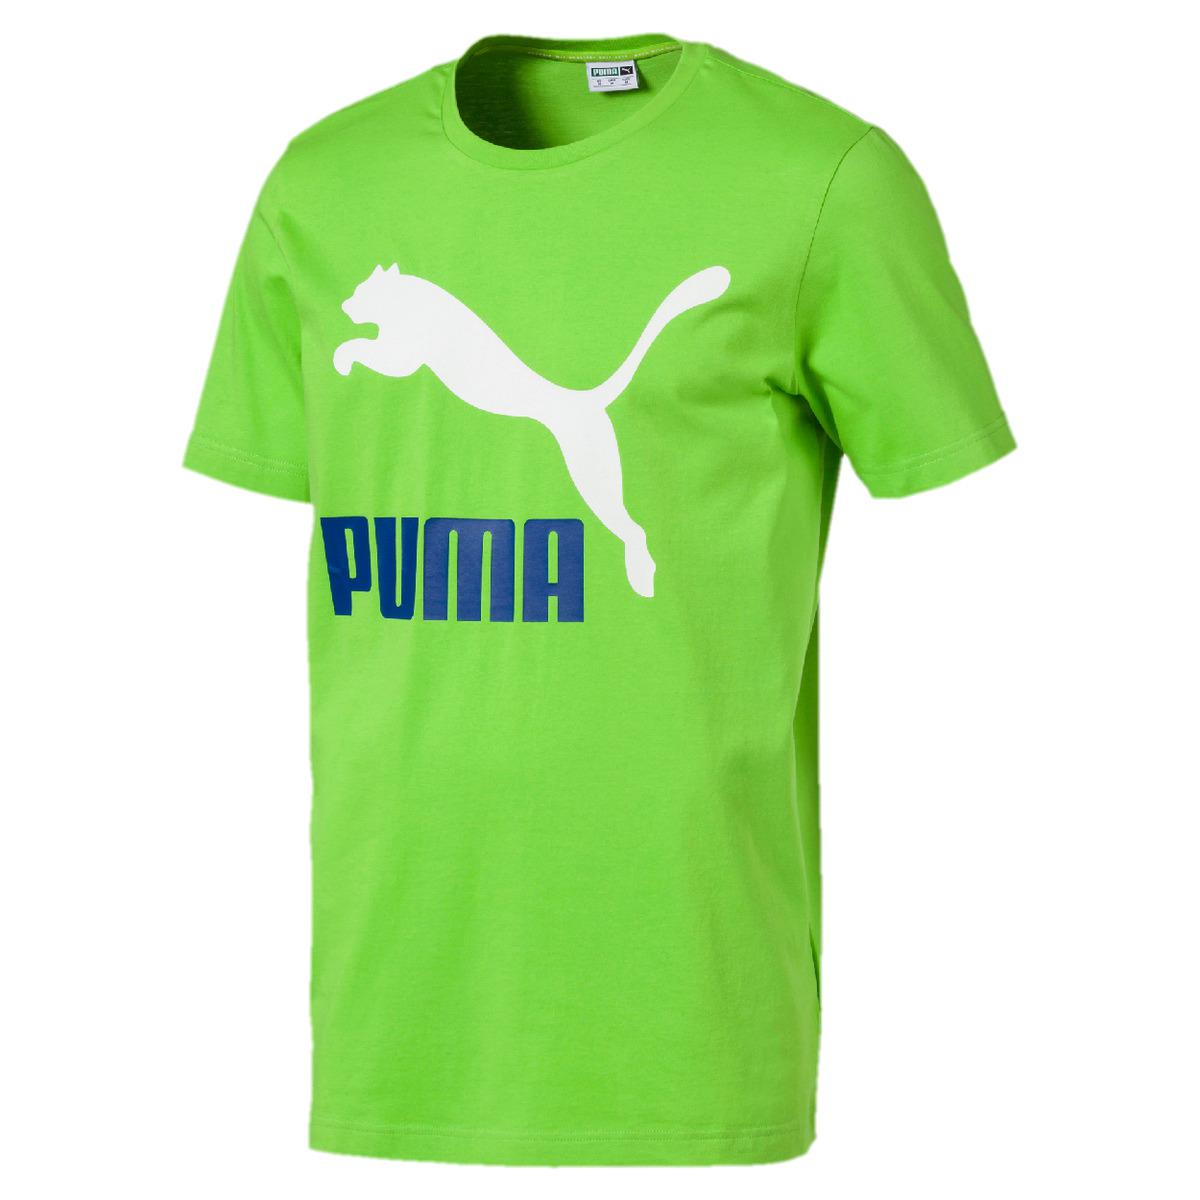 PUMA Cotton Classics Logo T-shirt in Green for Men - Lyst